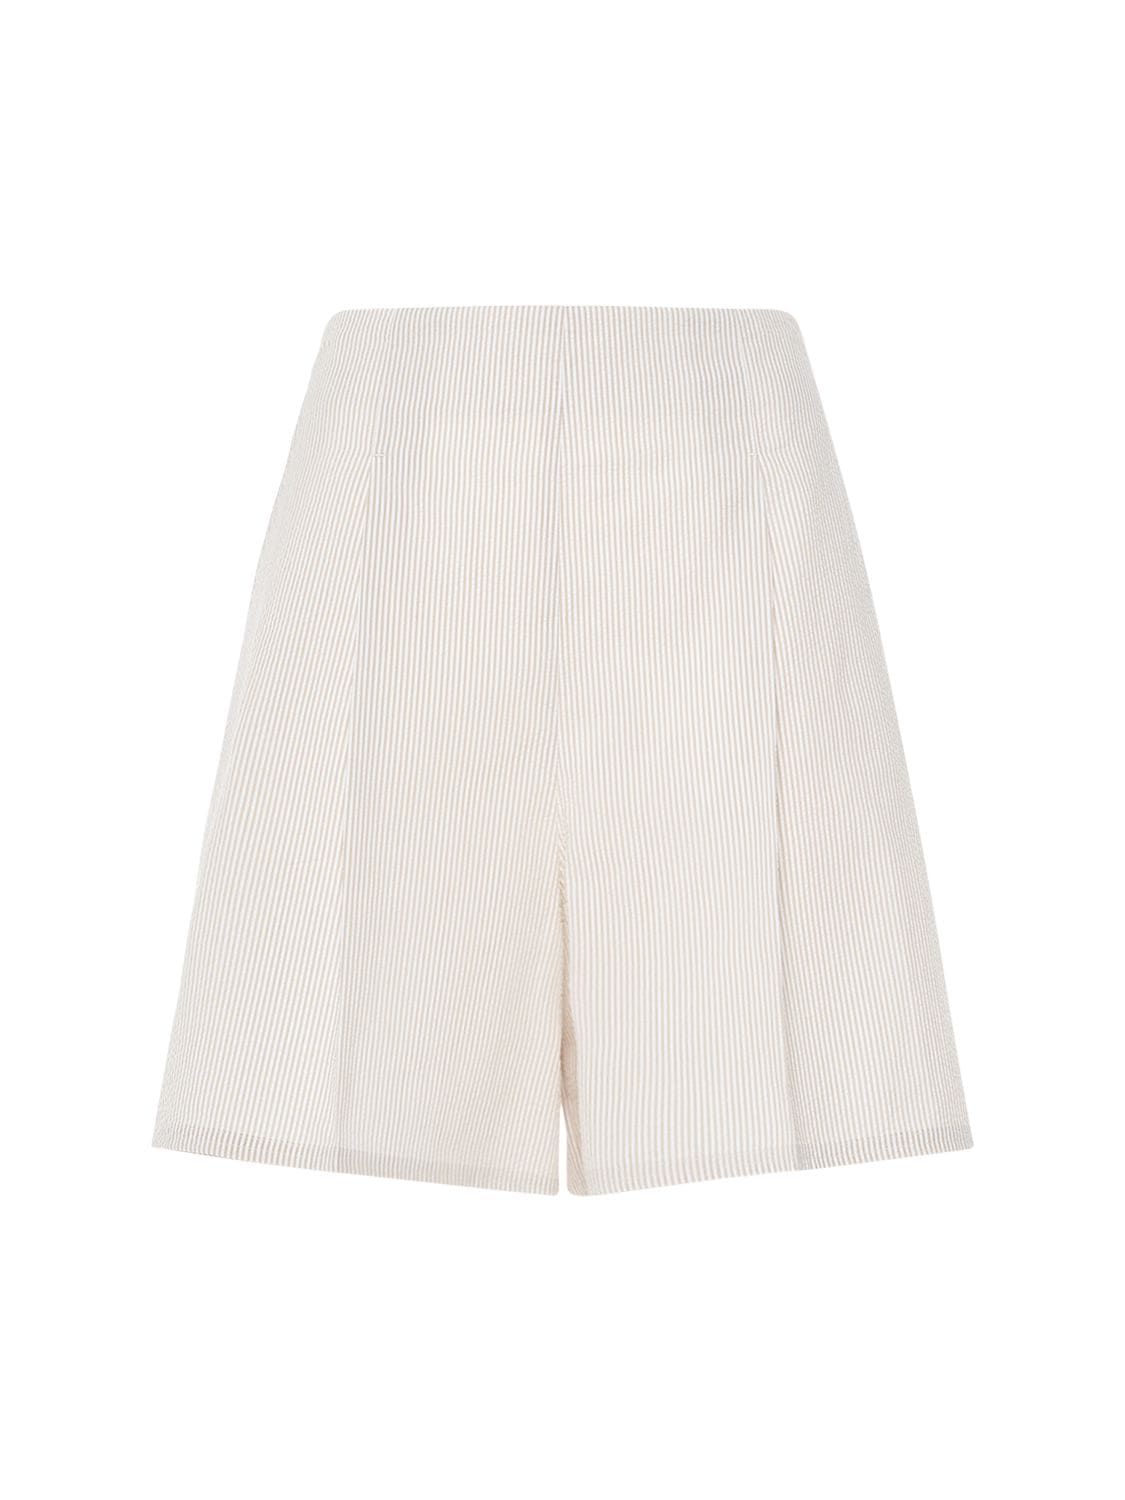 Max Mara Canale Seersucker Cotton Shorts In White,ecru